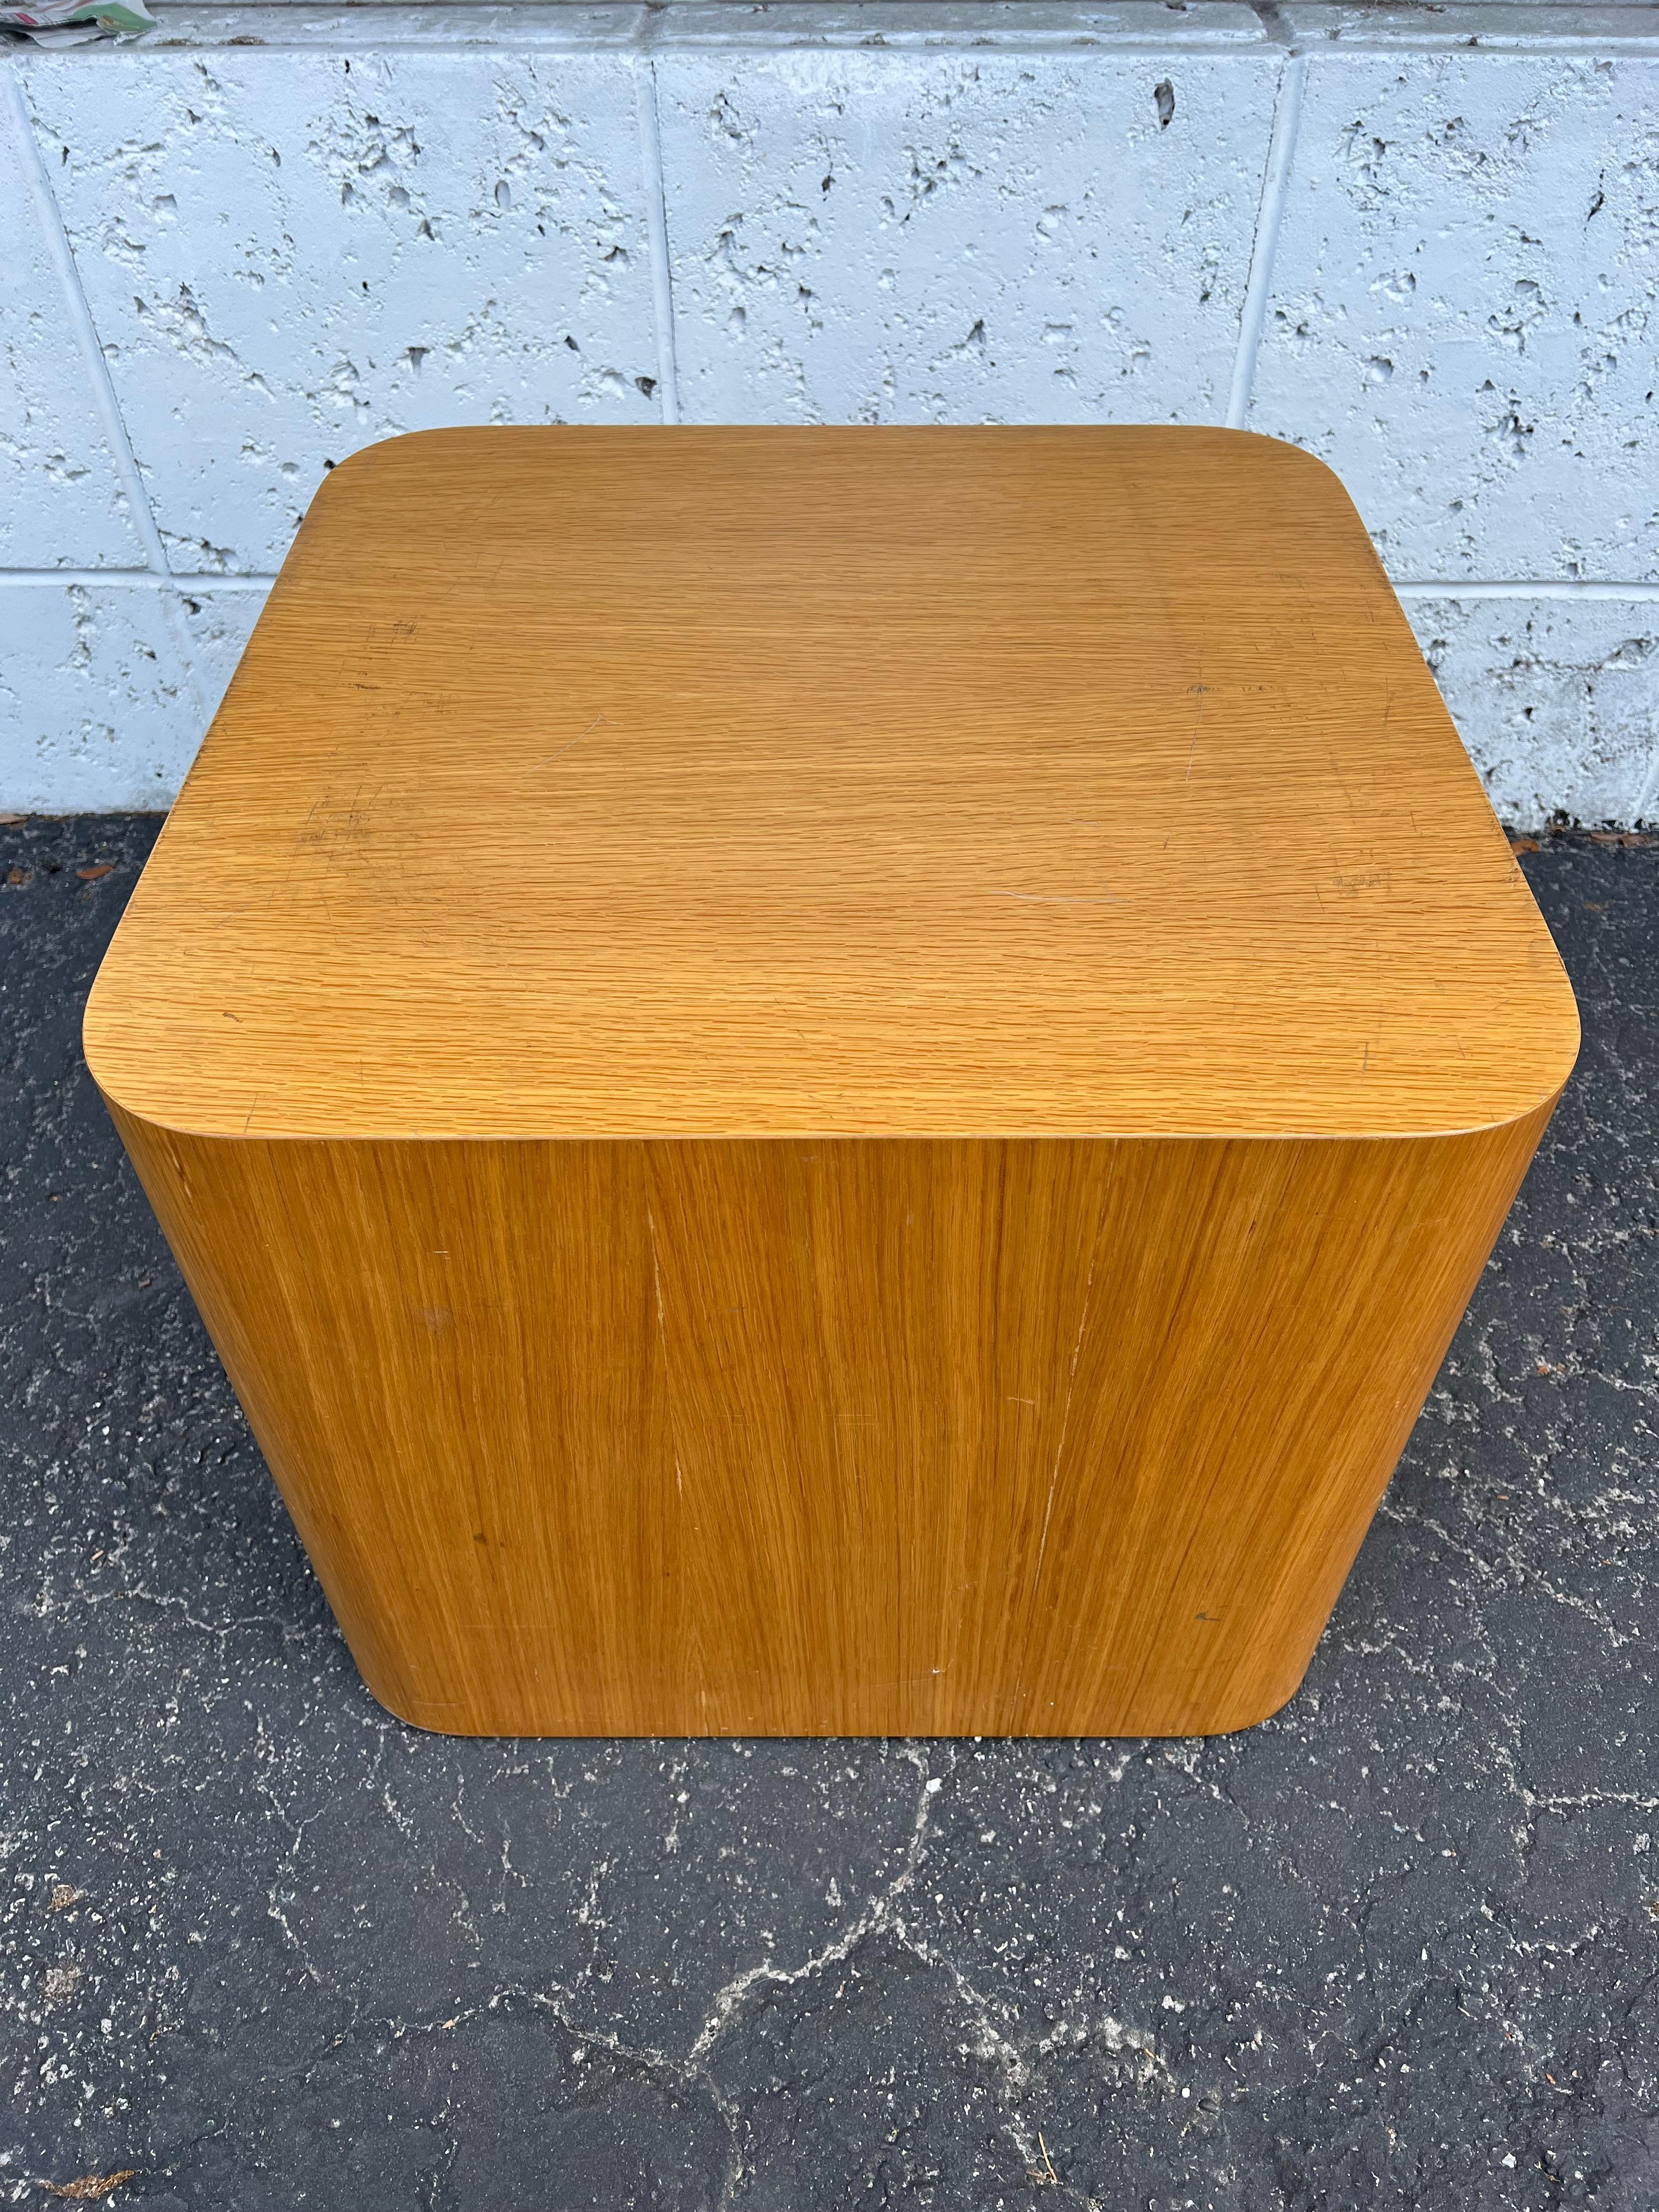 Oak Habitat Intrex Pedestal Table For Sale